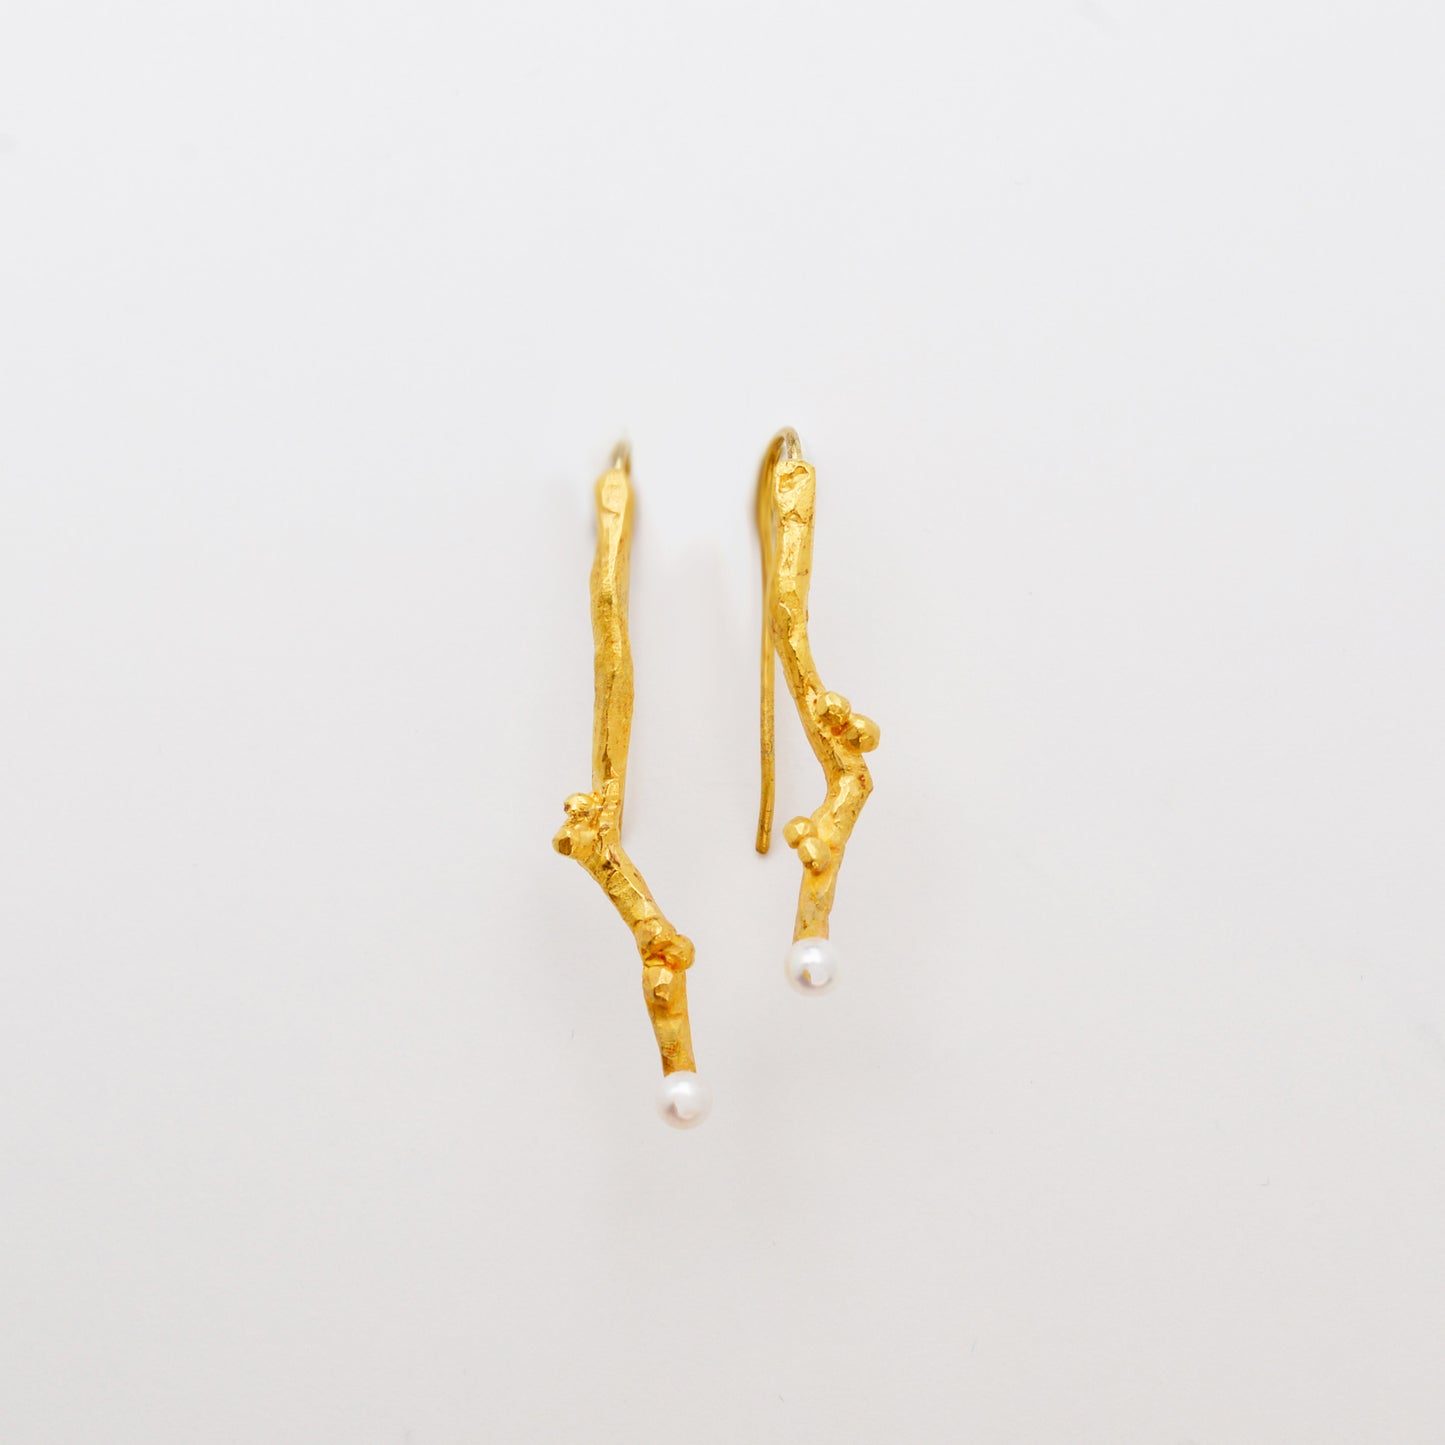 Sasayaki - Asymmetric earrings gold plated with pearl